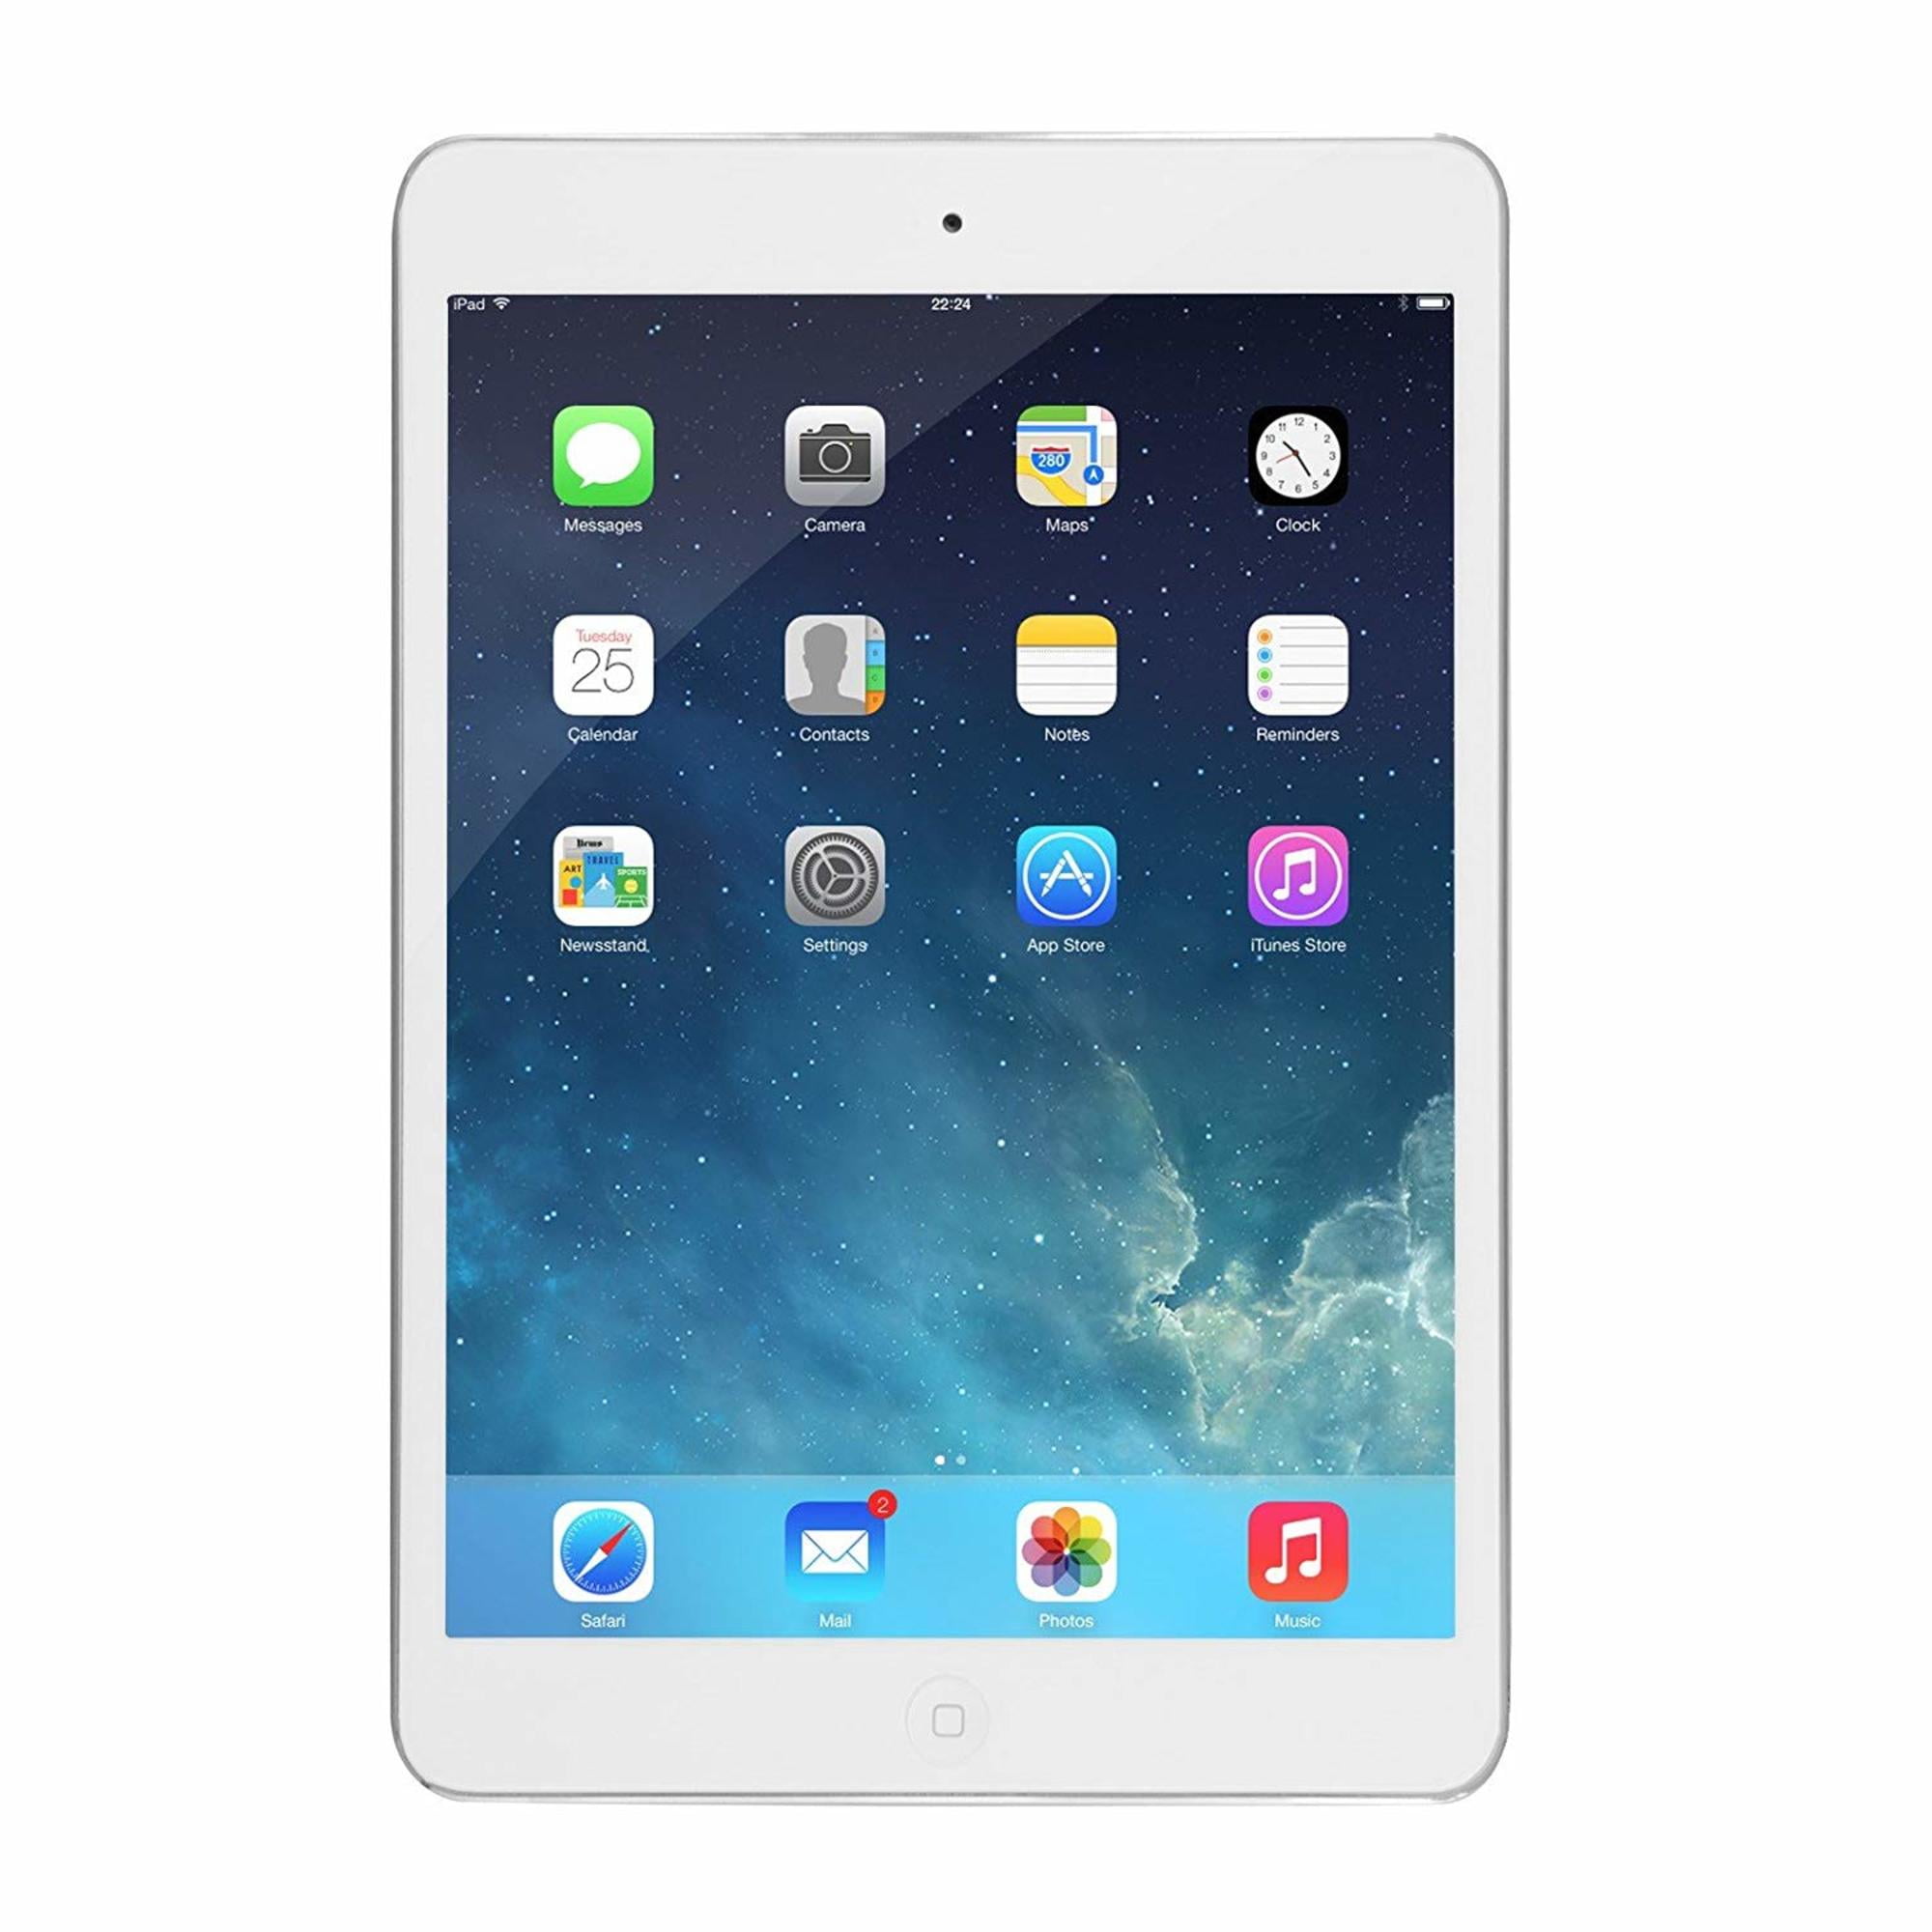 Apple iPad Mini 32GB WiFi Unlocked Tablet - Silver (Refurbished